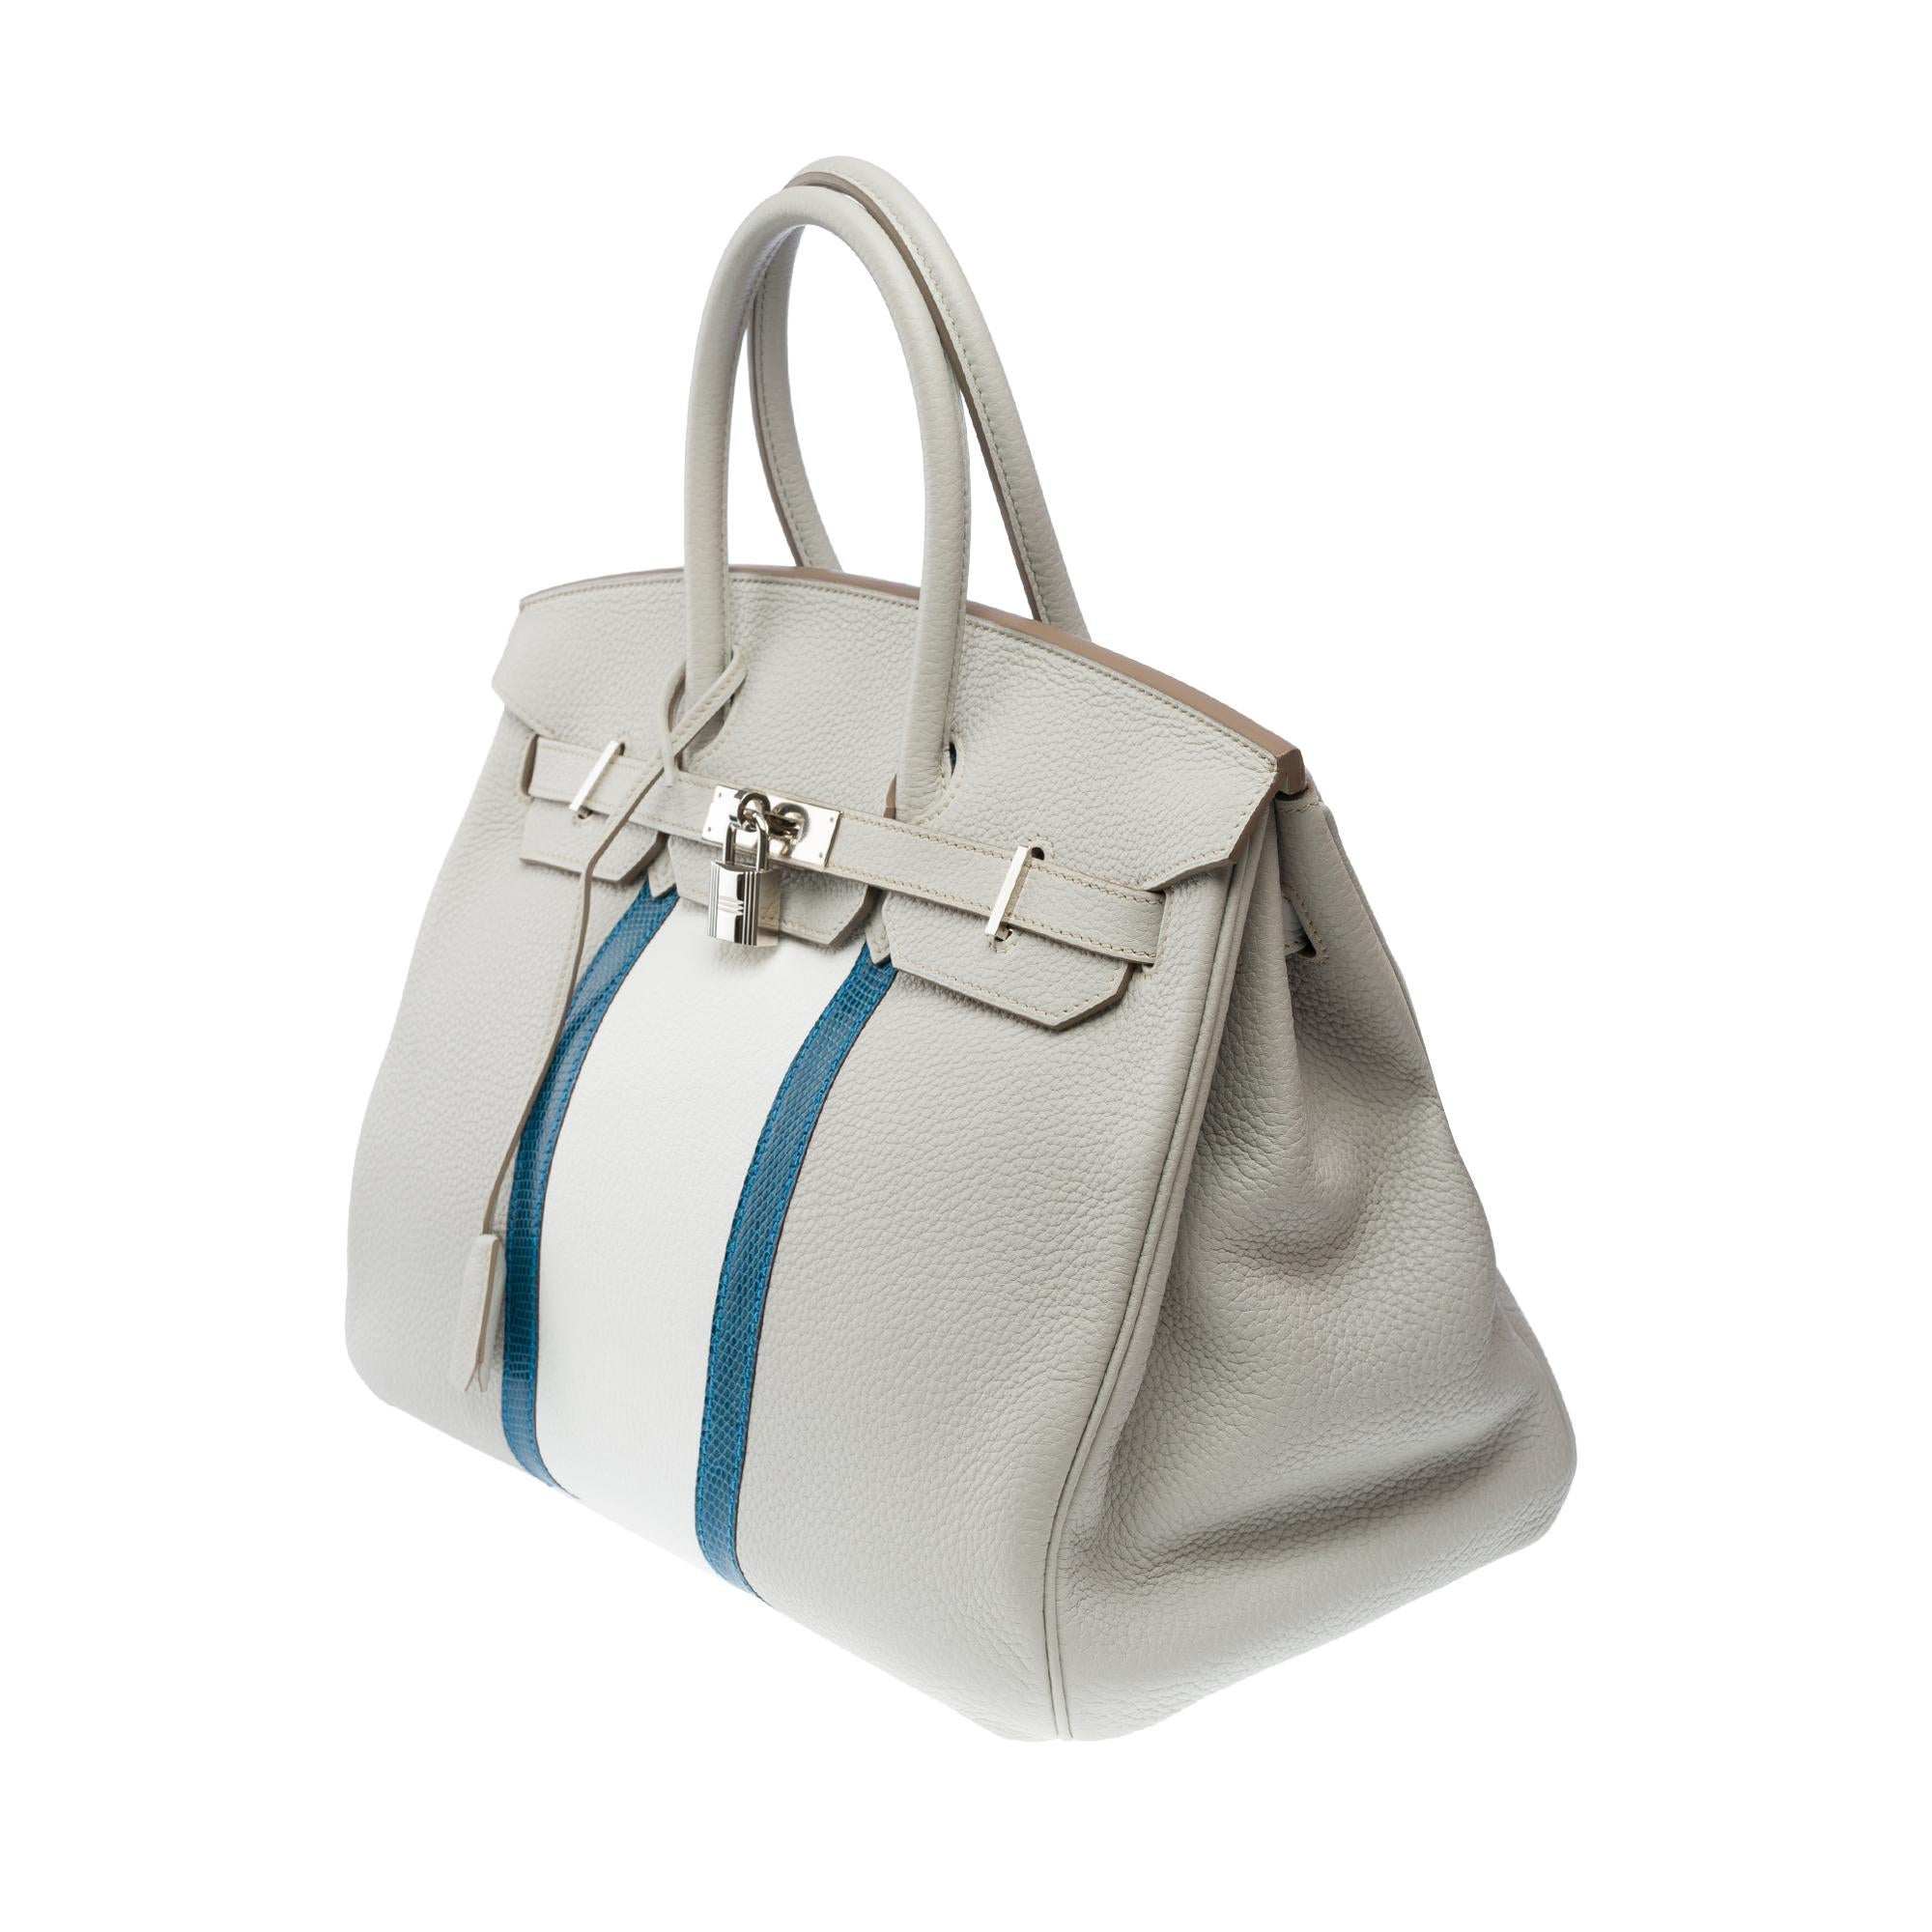 Rare Hermès Birkin Club 35 handbag in grey, white leather and blue lizard, SHW For Sale 2